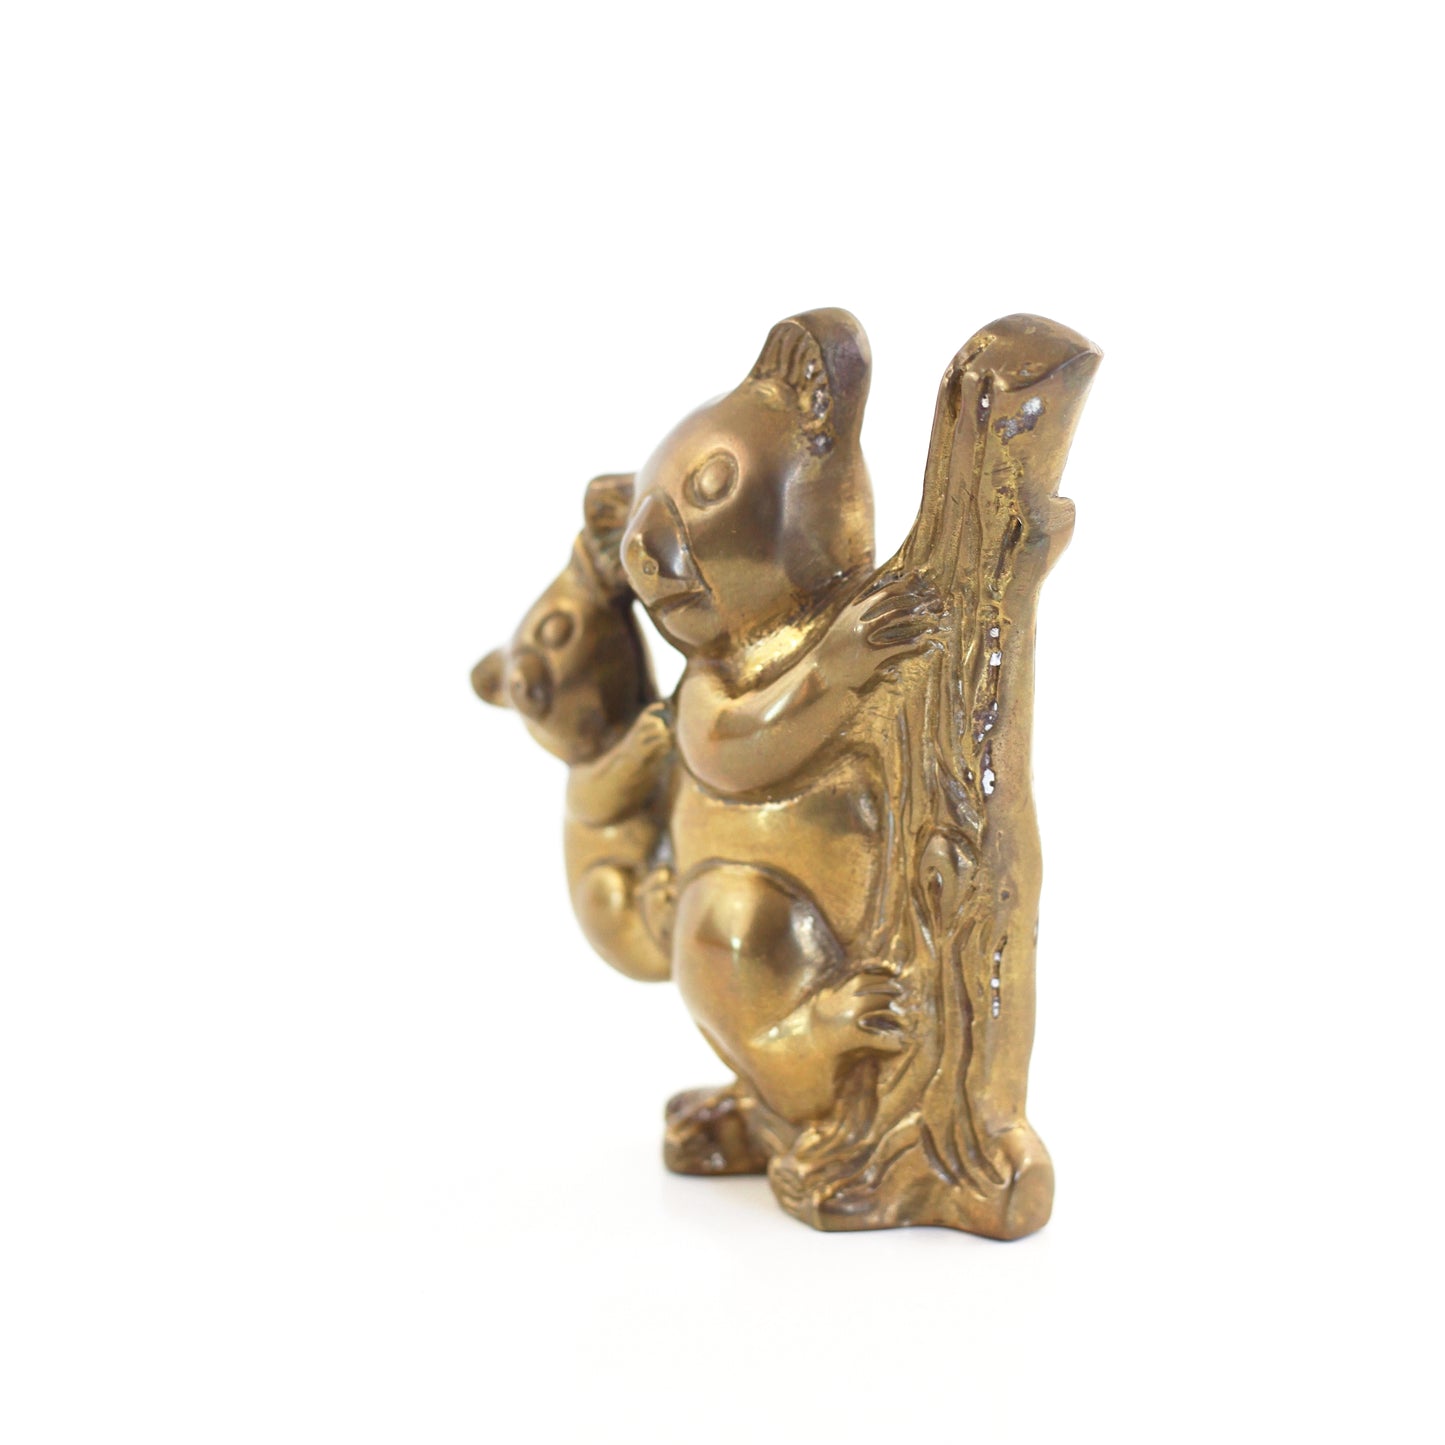 SOLD - Vintage Brass Koalas Figurine